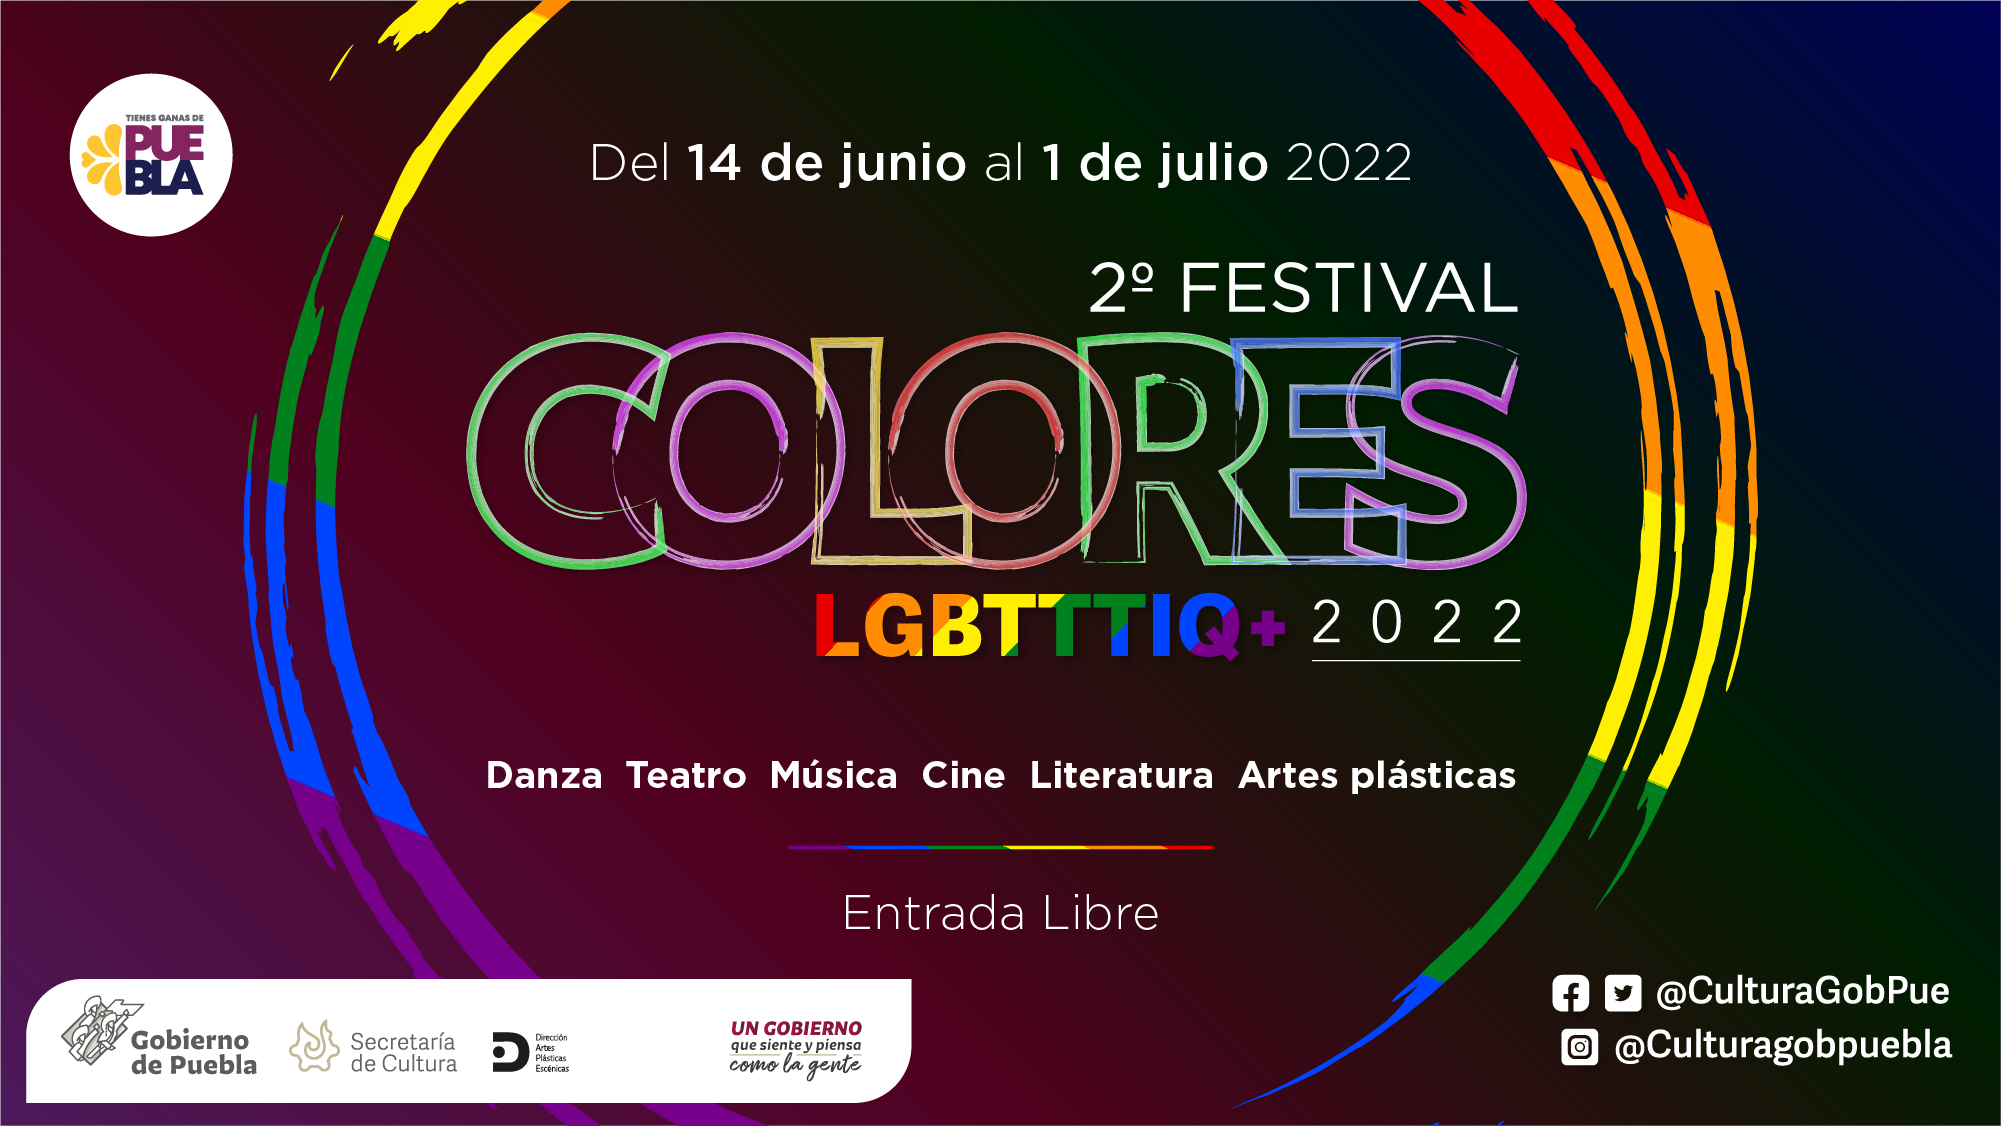 Festival Colores llega en el mes del orgullo a Puebla